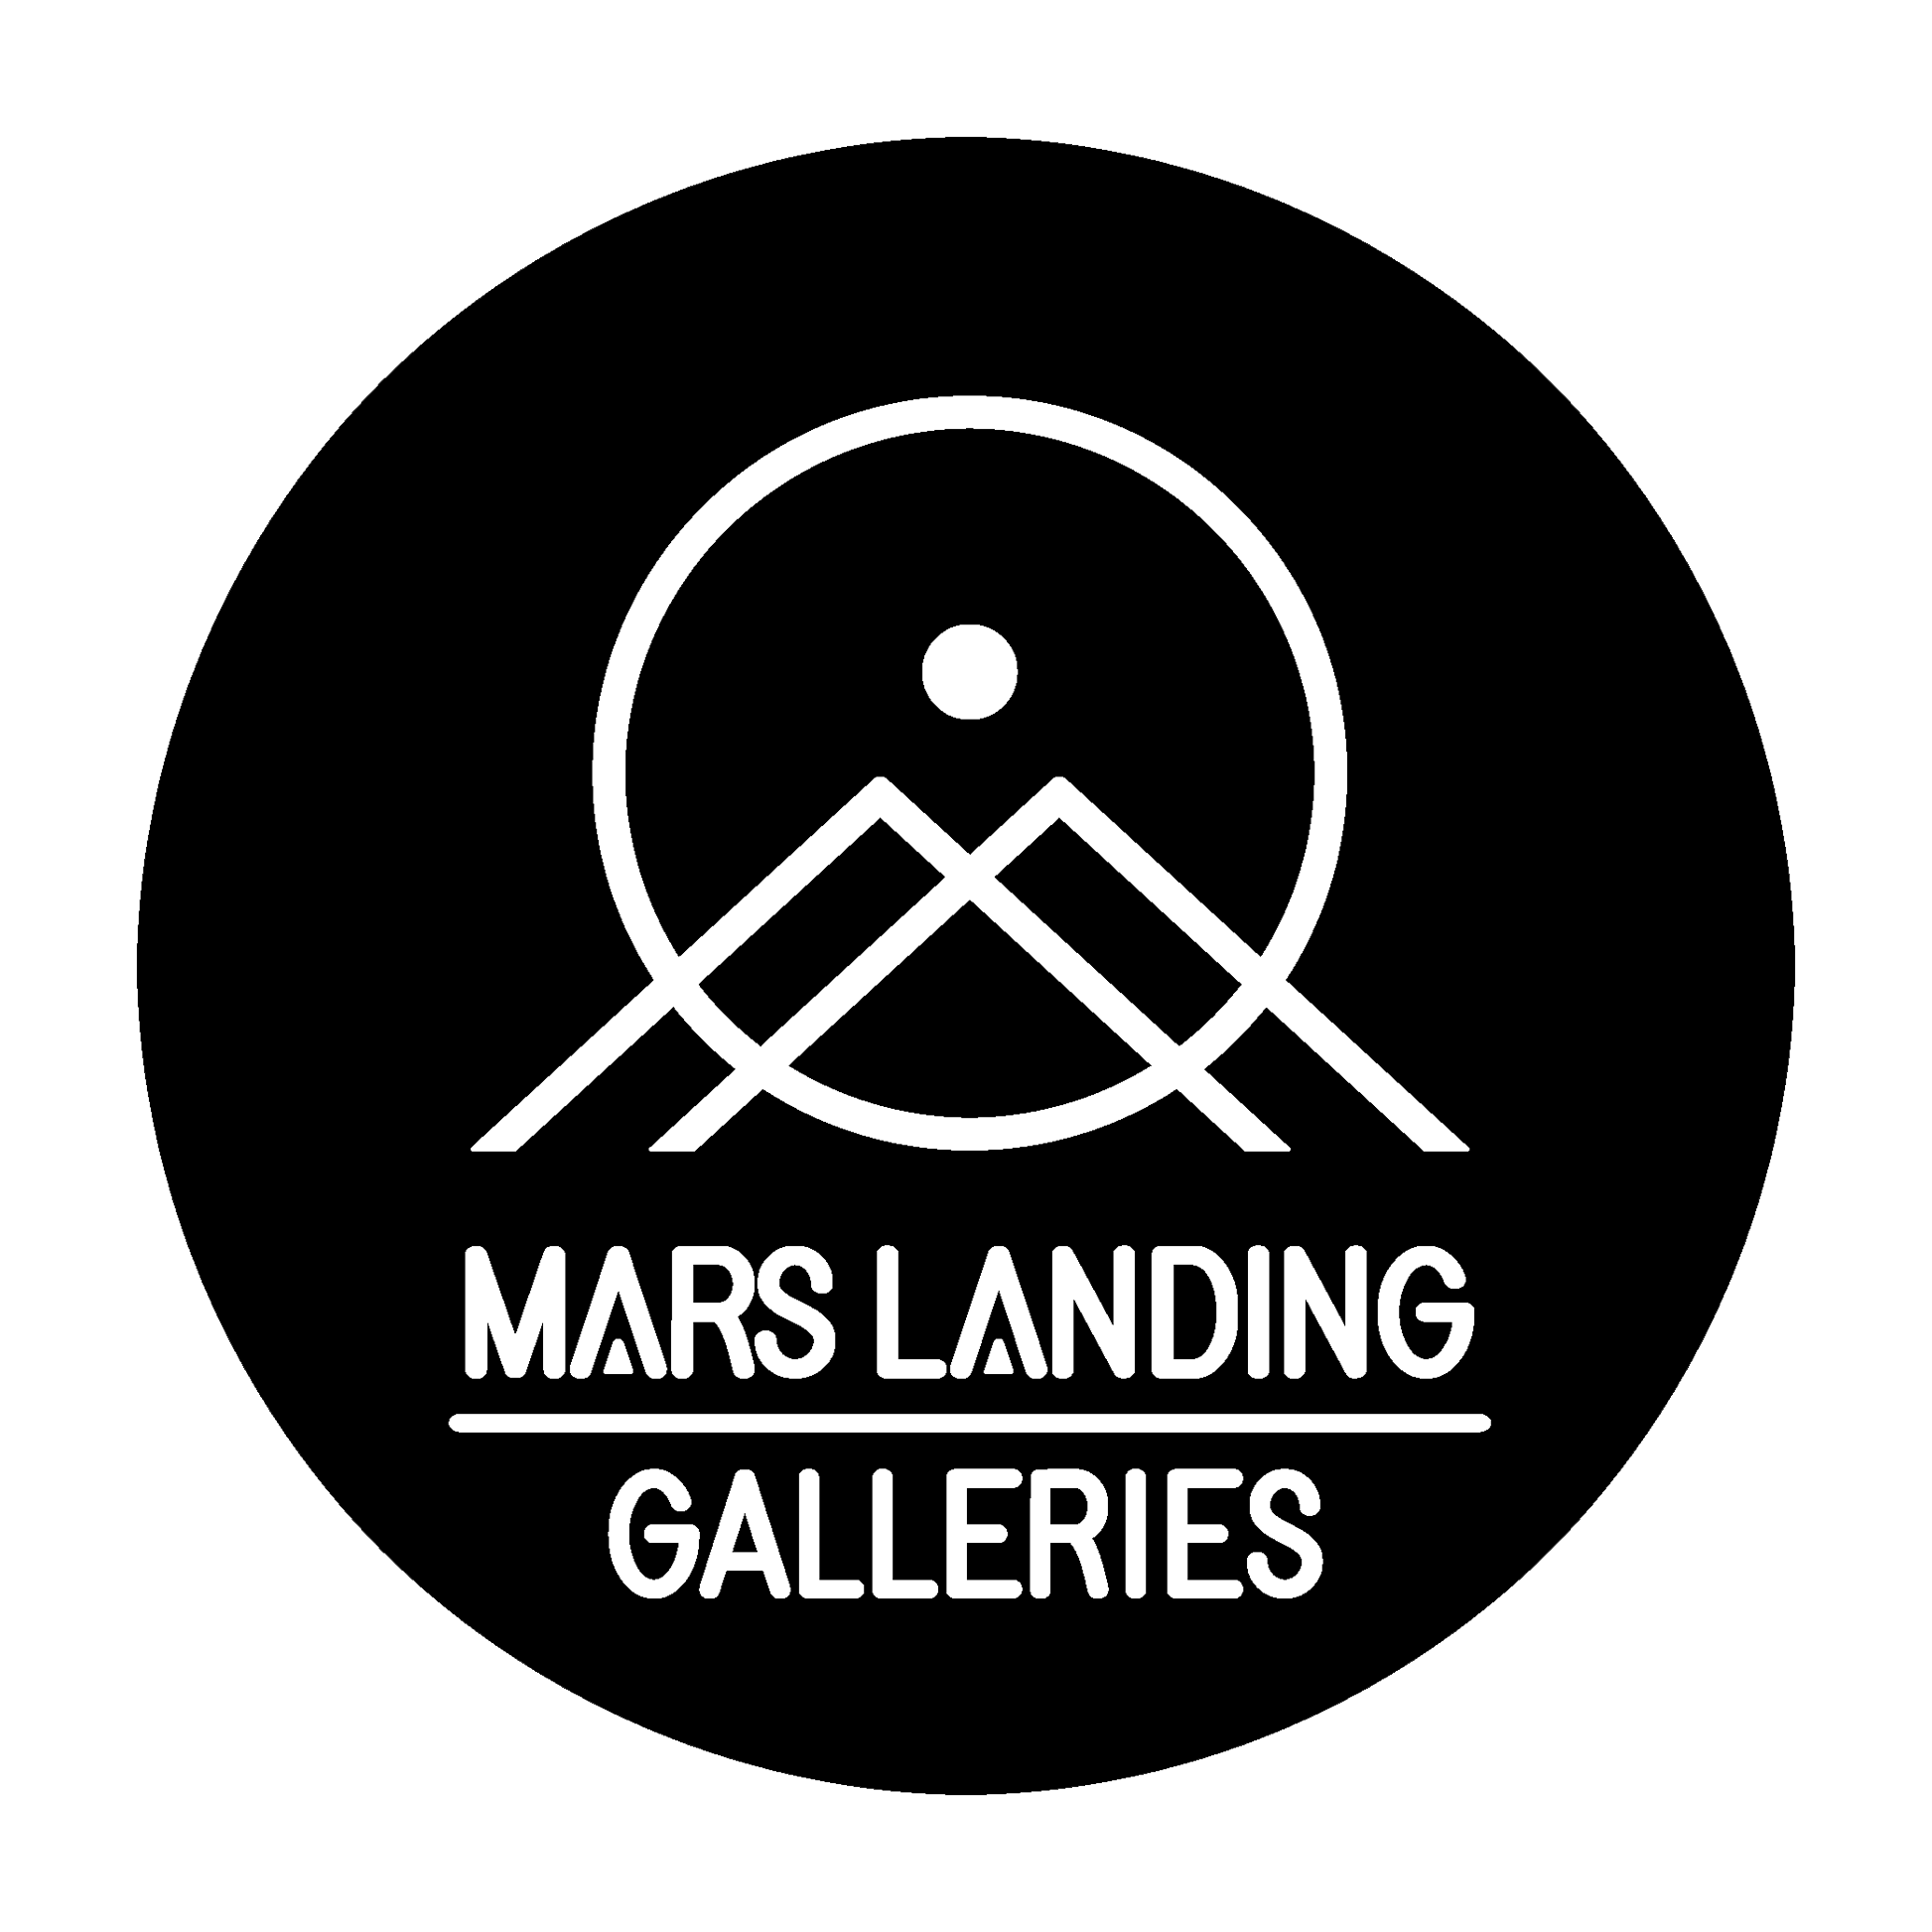 Mars Landing Galleries